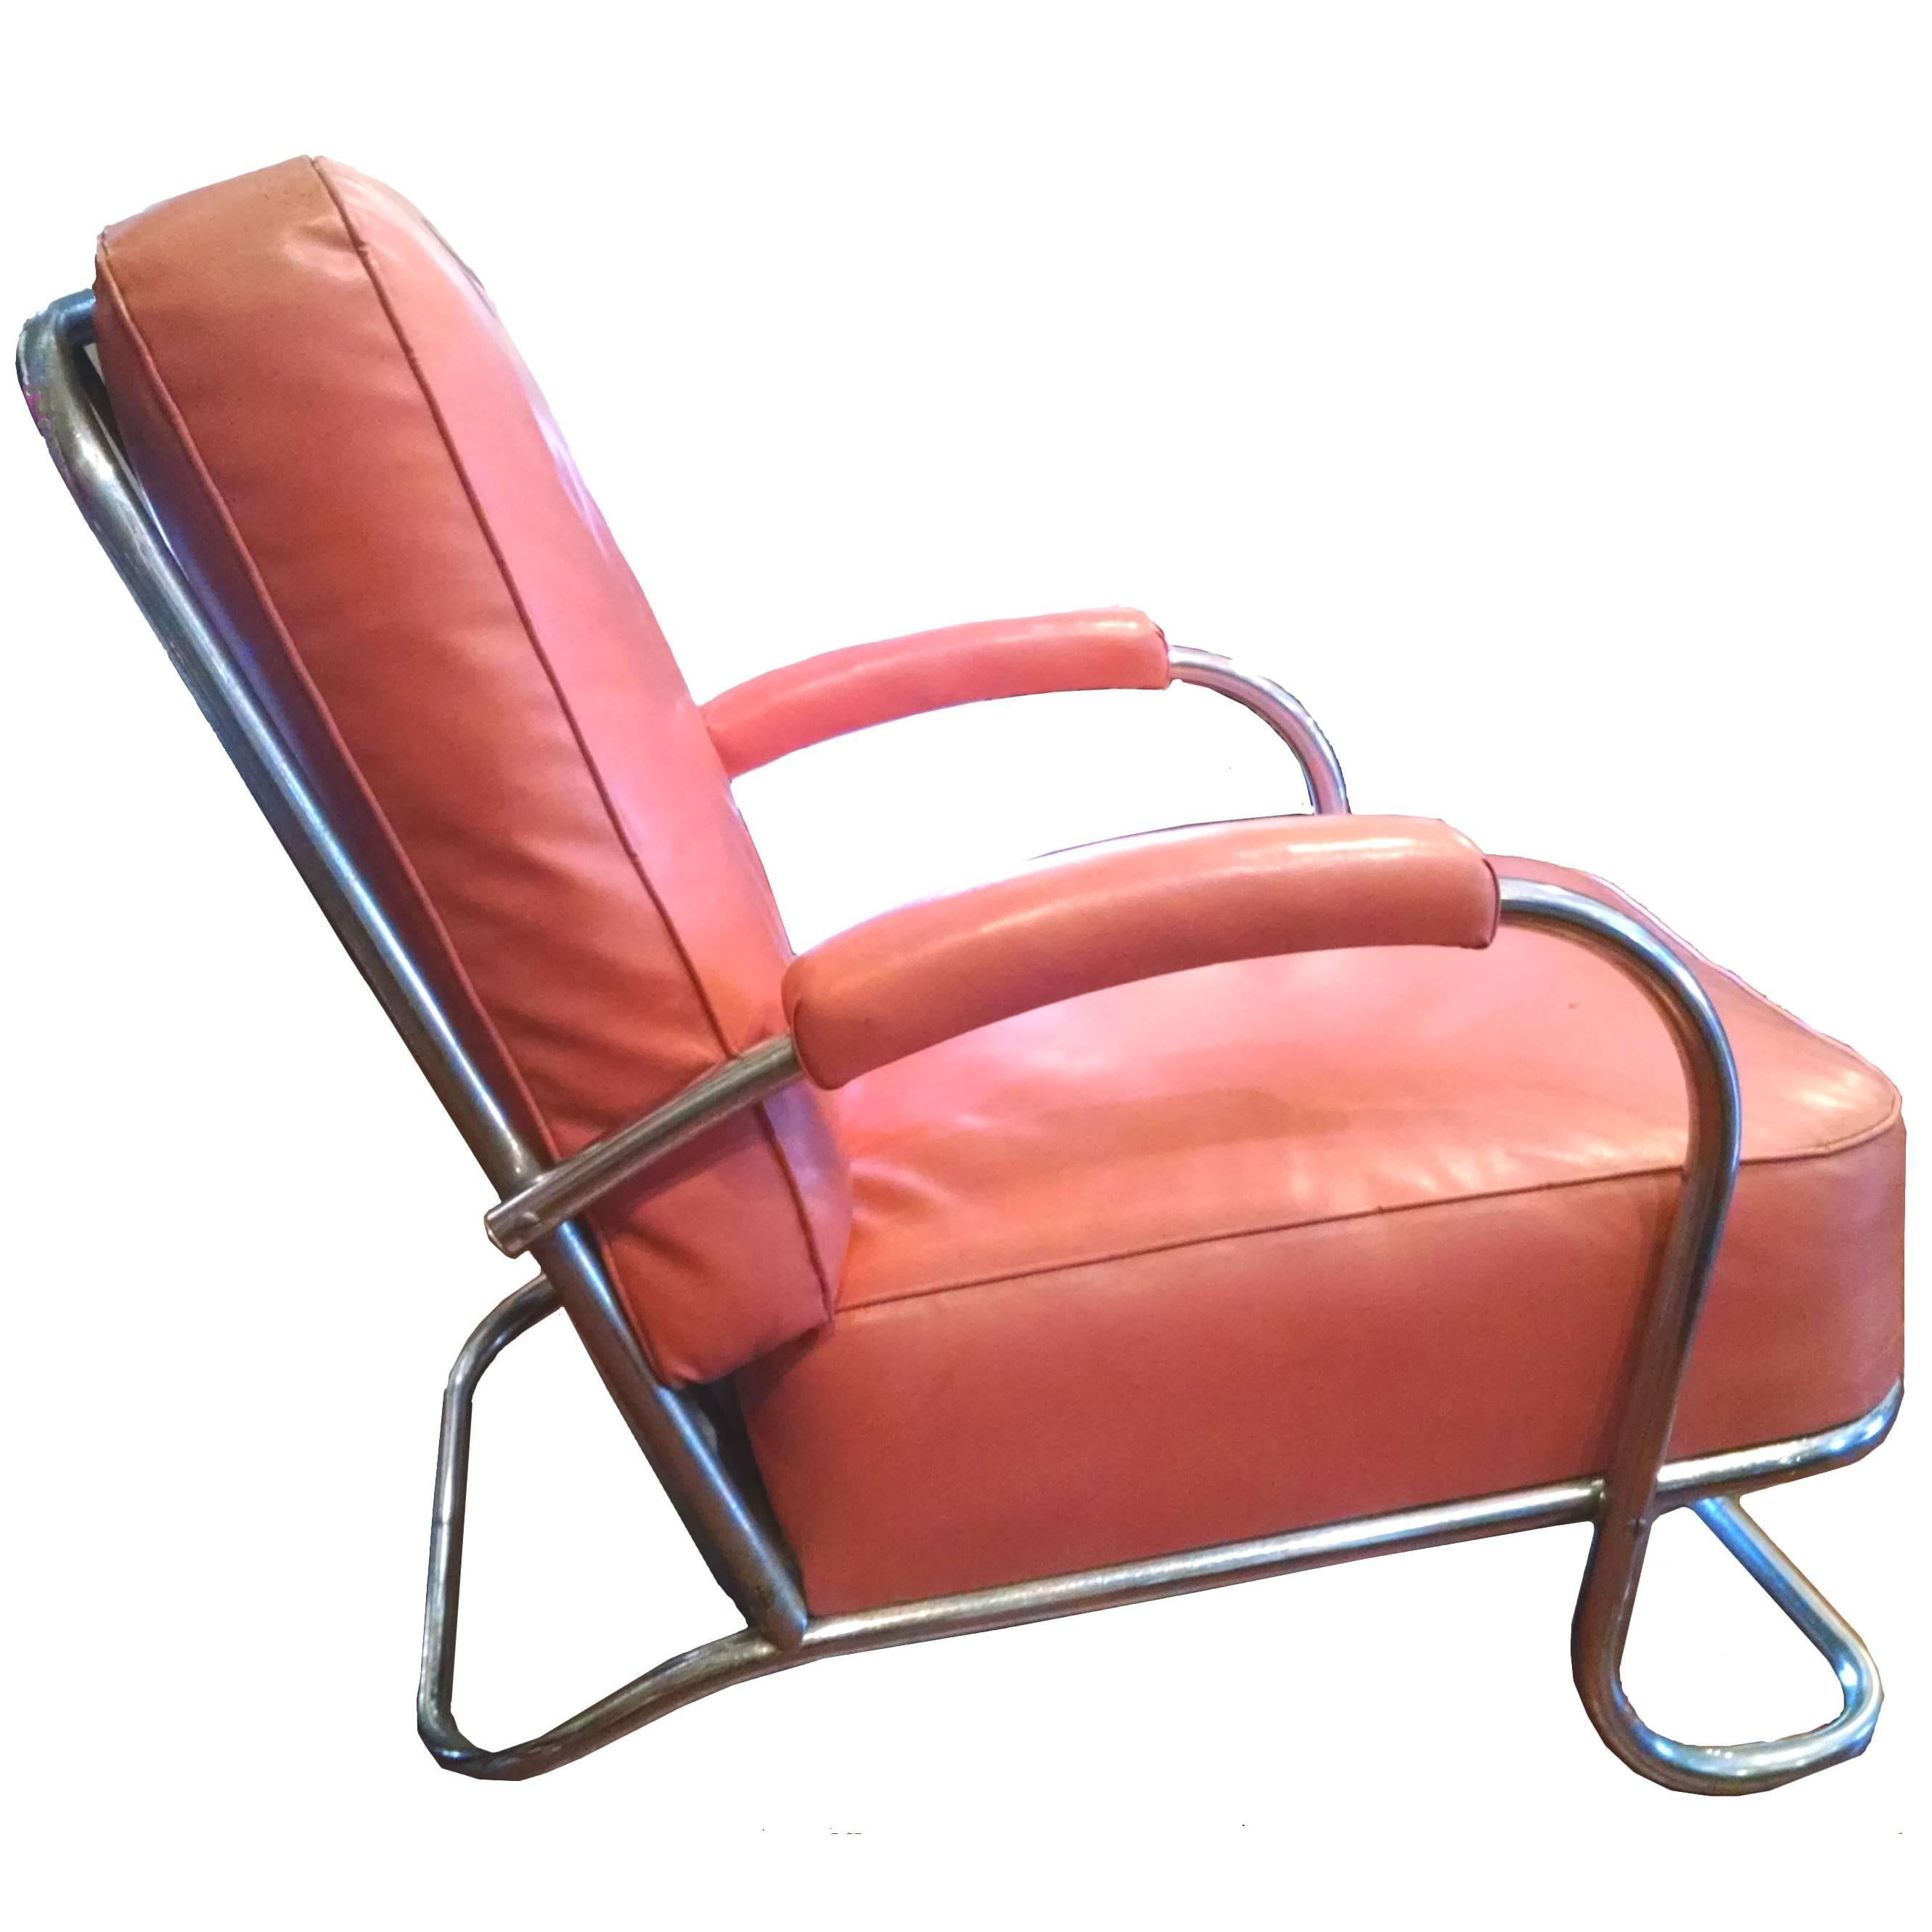 Chromed Art Deco Lounge Chair, 1936